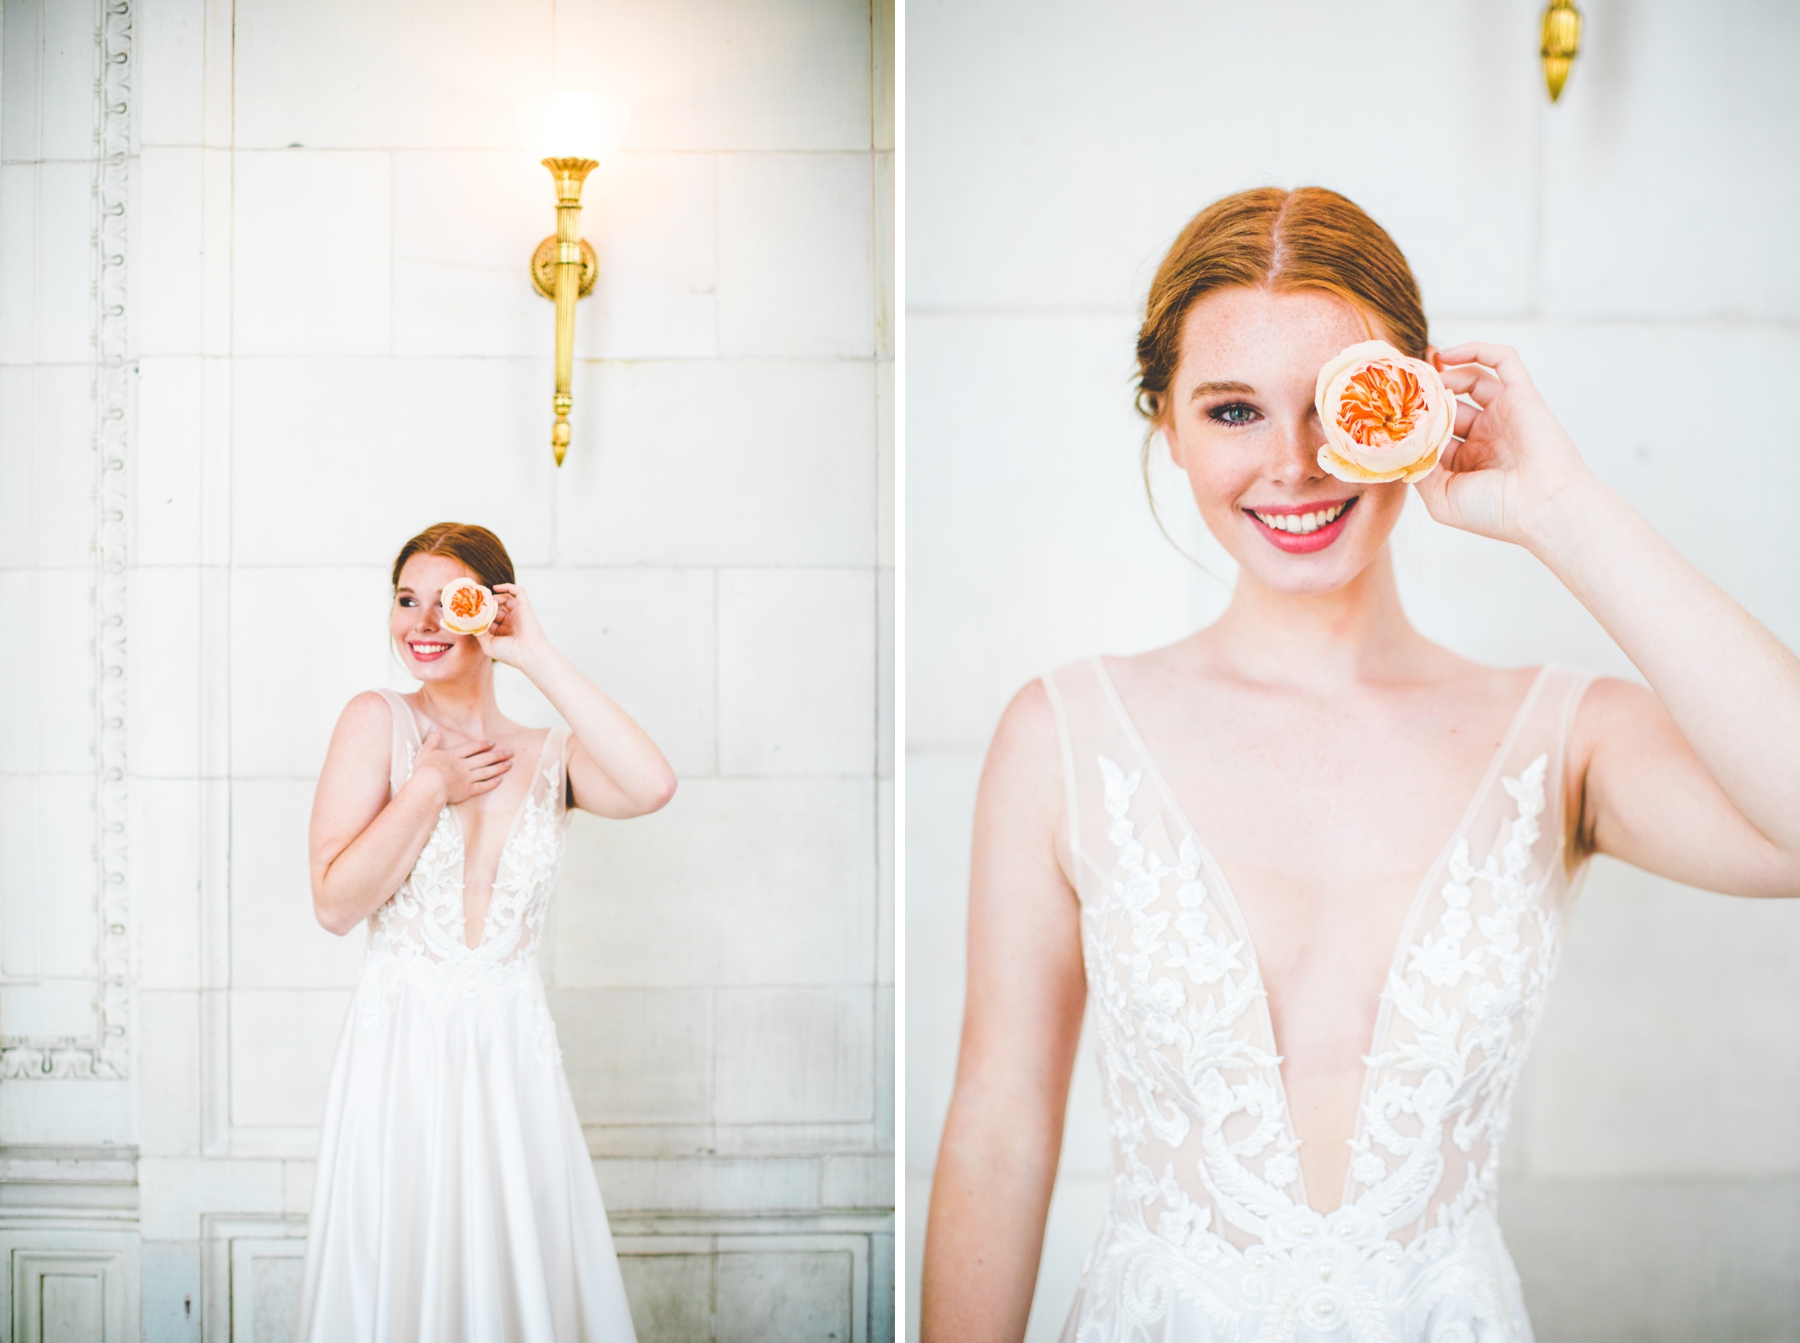 Gatsby Inspired Photoshoot by AR Wedding Photographer Lissa Chandler